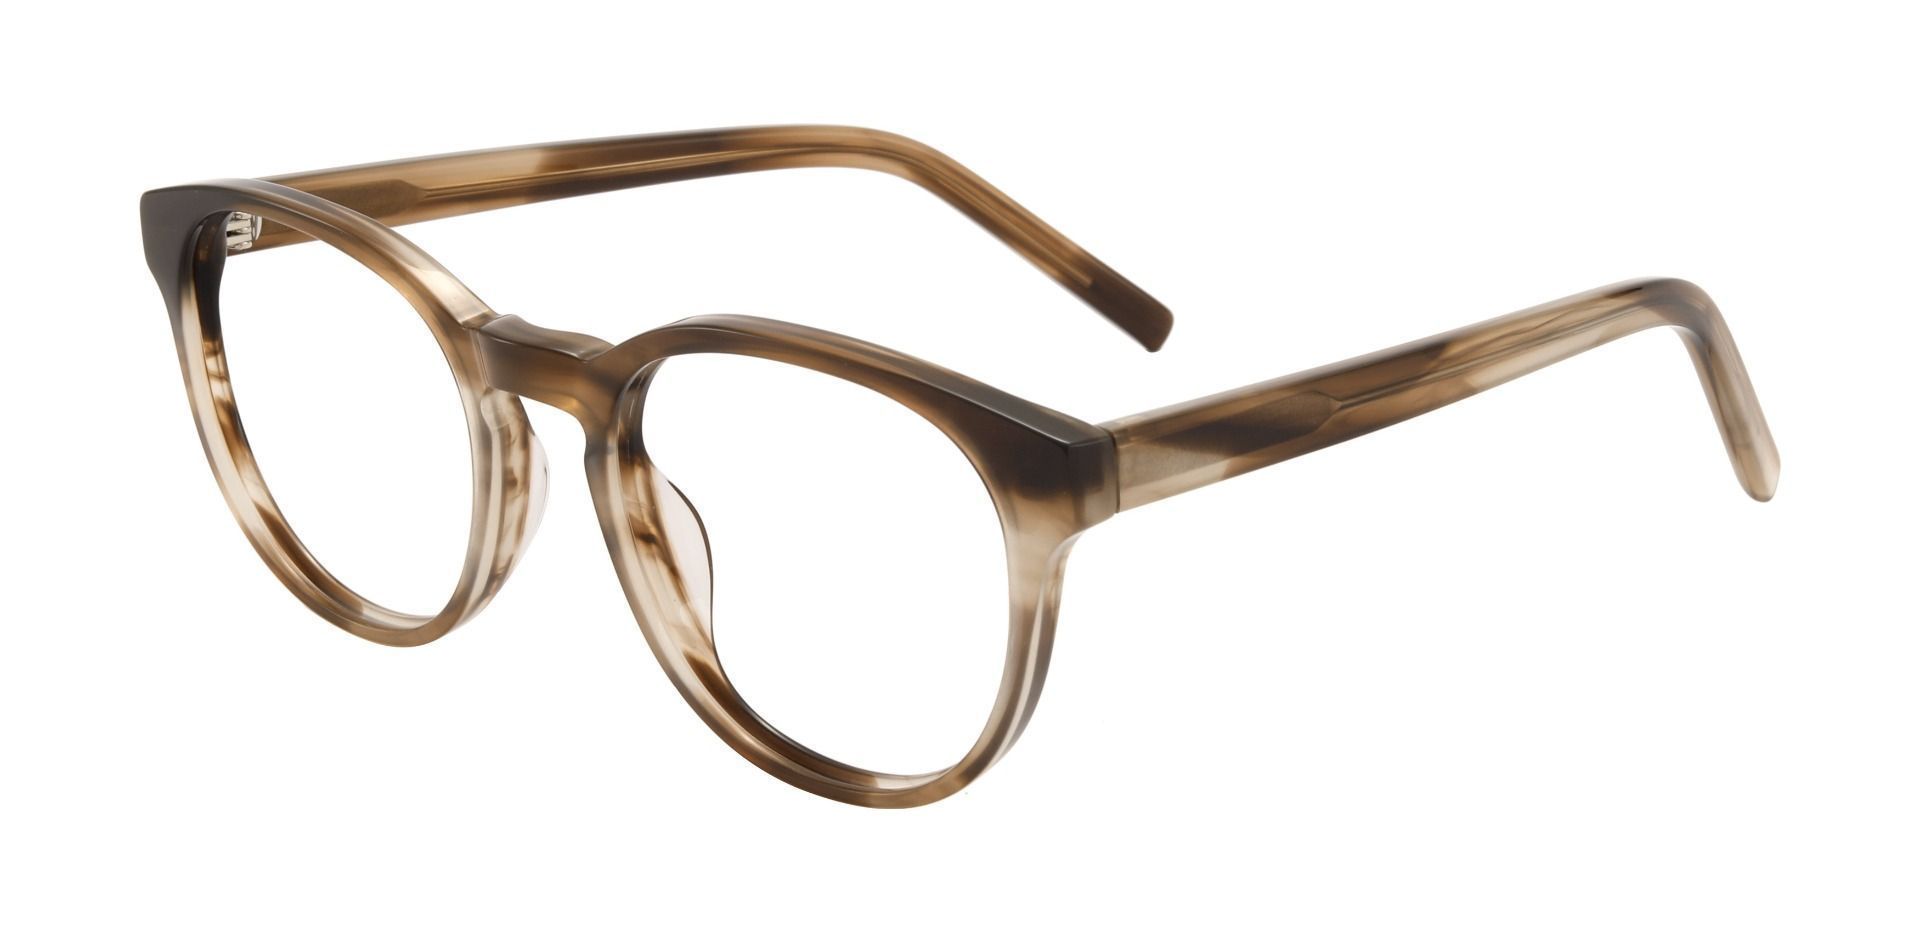 Wayland Oval Prescription Glasses - Brown